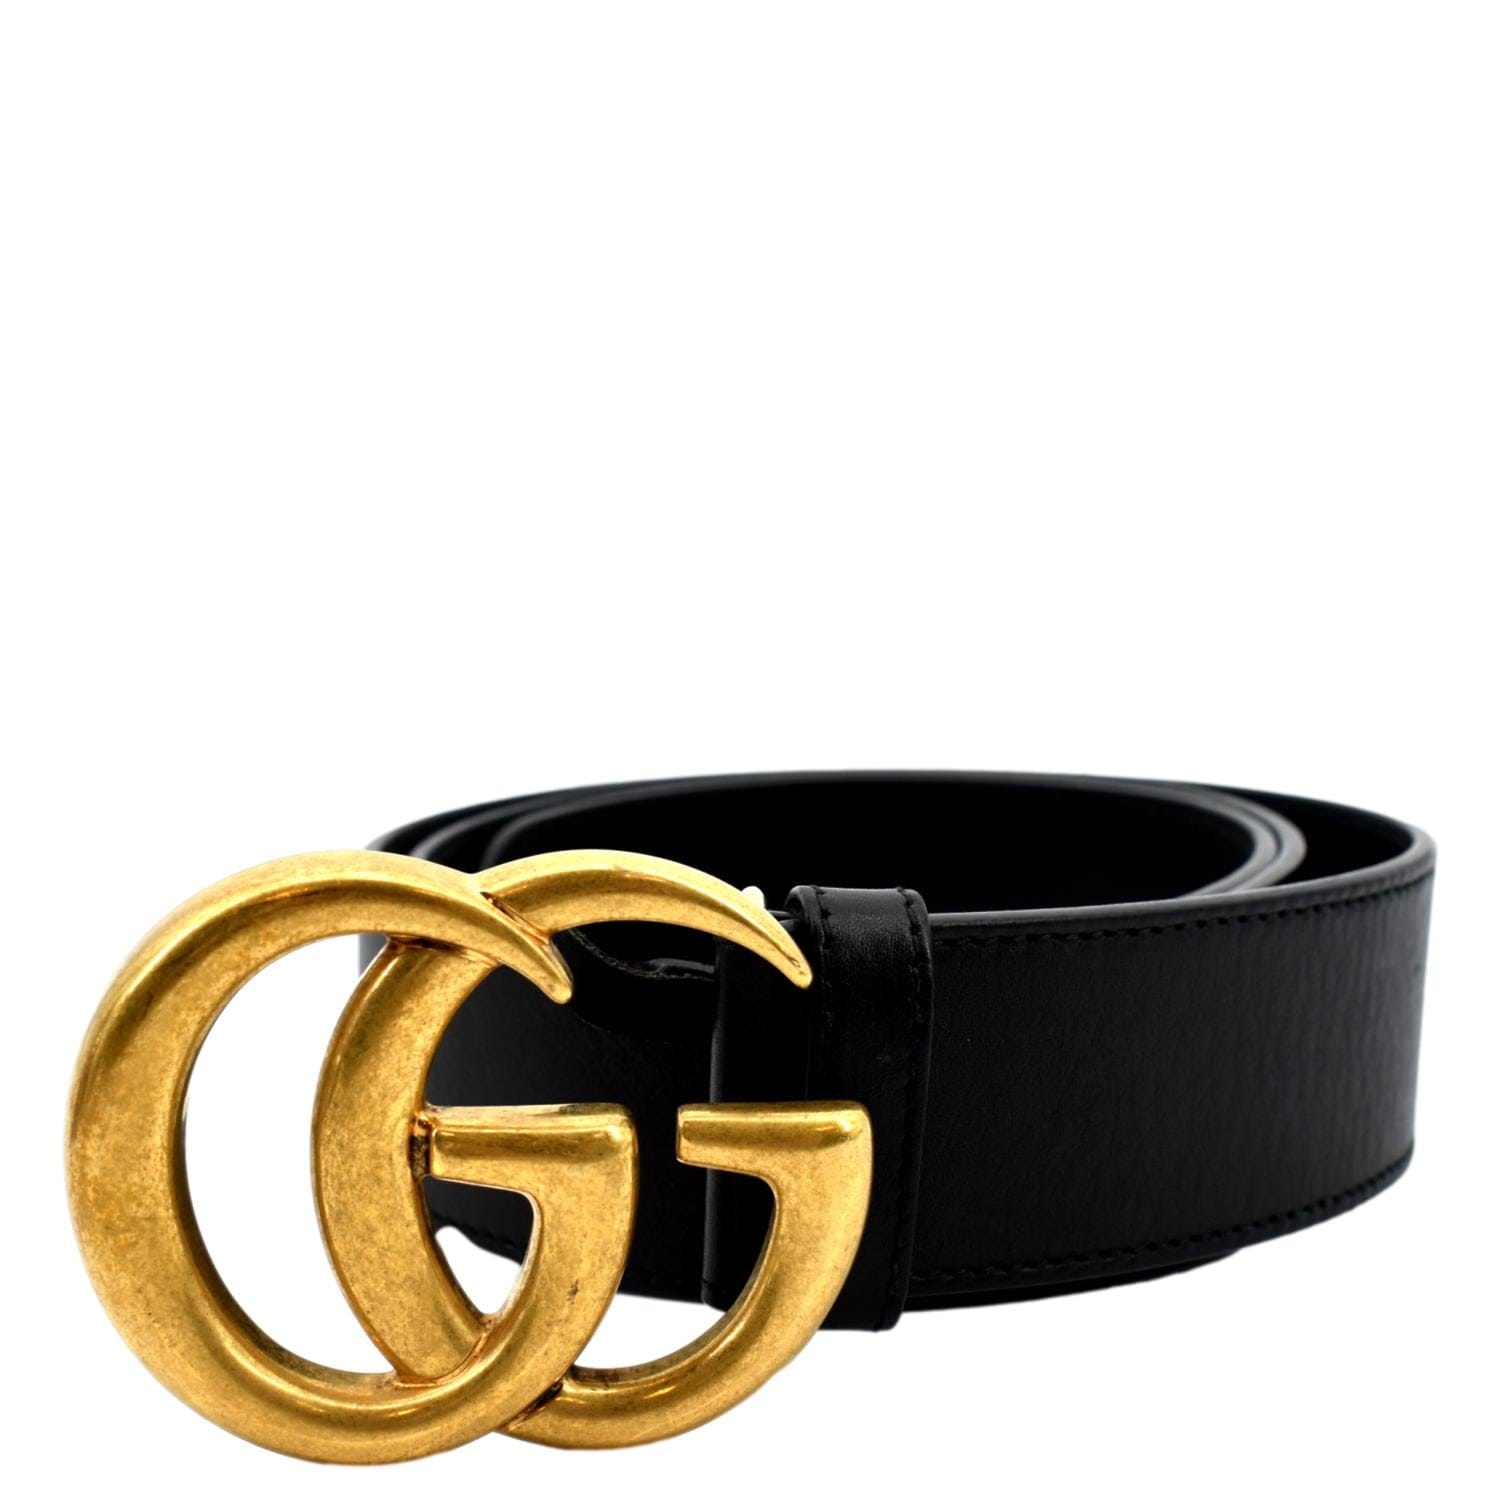 Mens Gucci Belt Black Leather GG Monogram Belt Authentic for